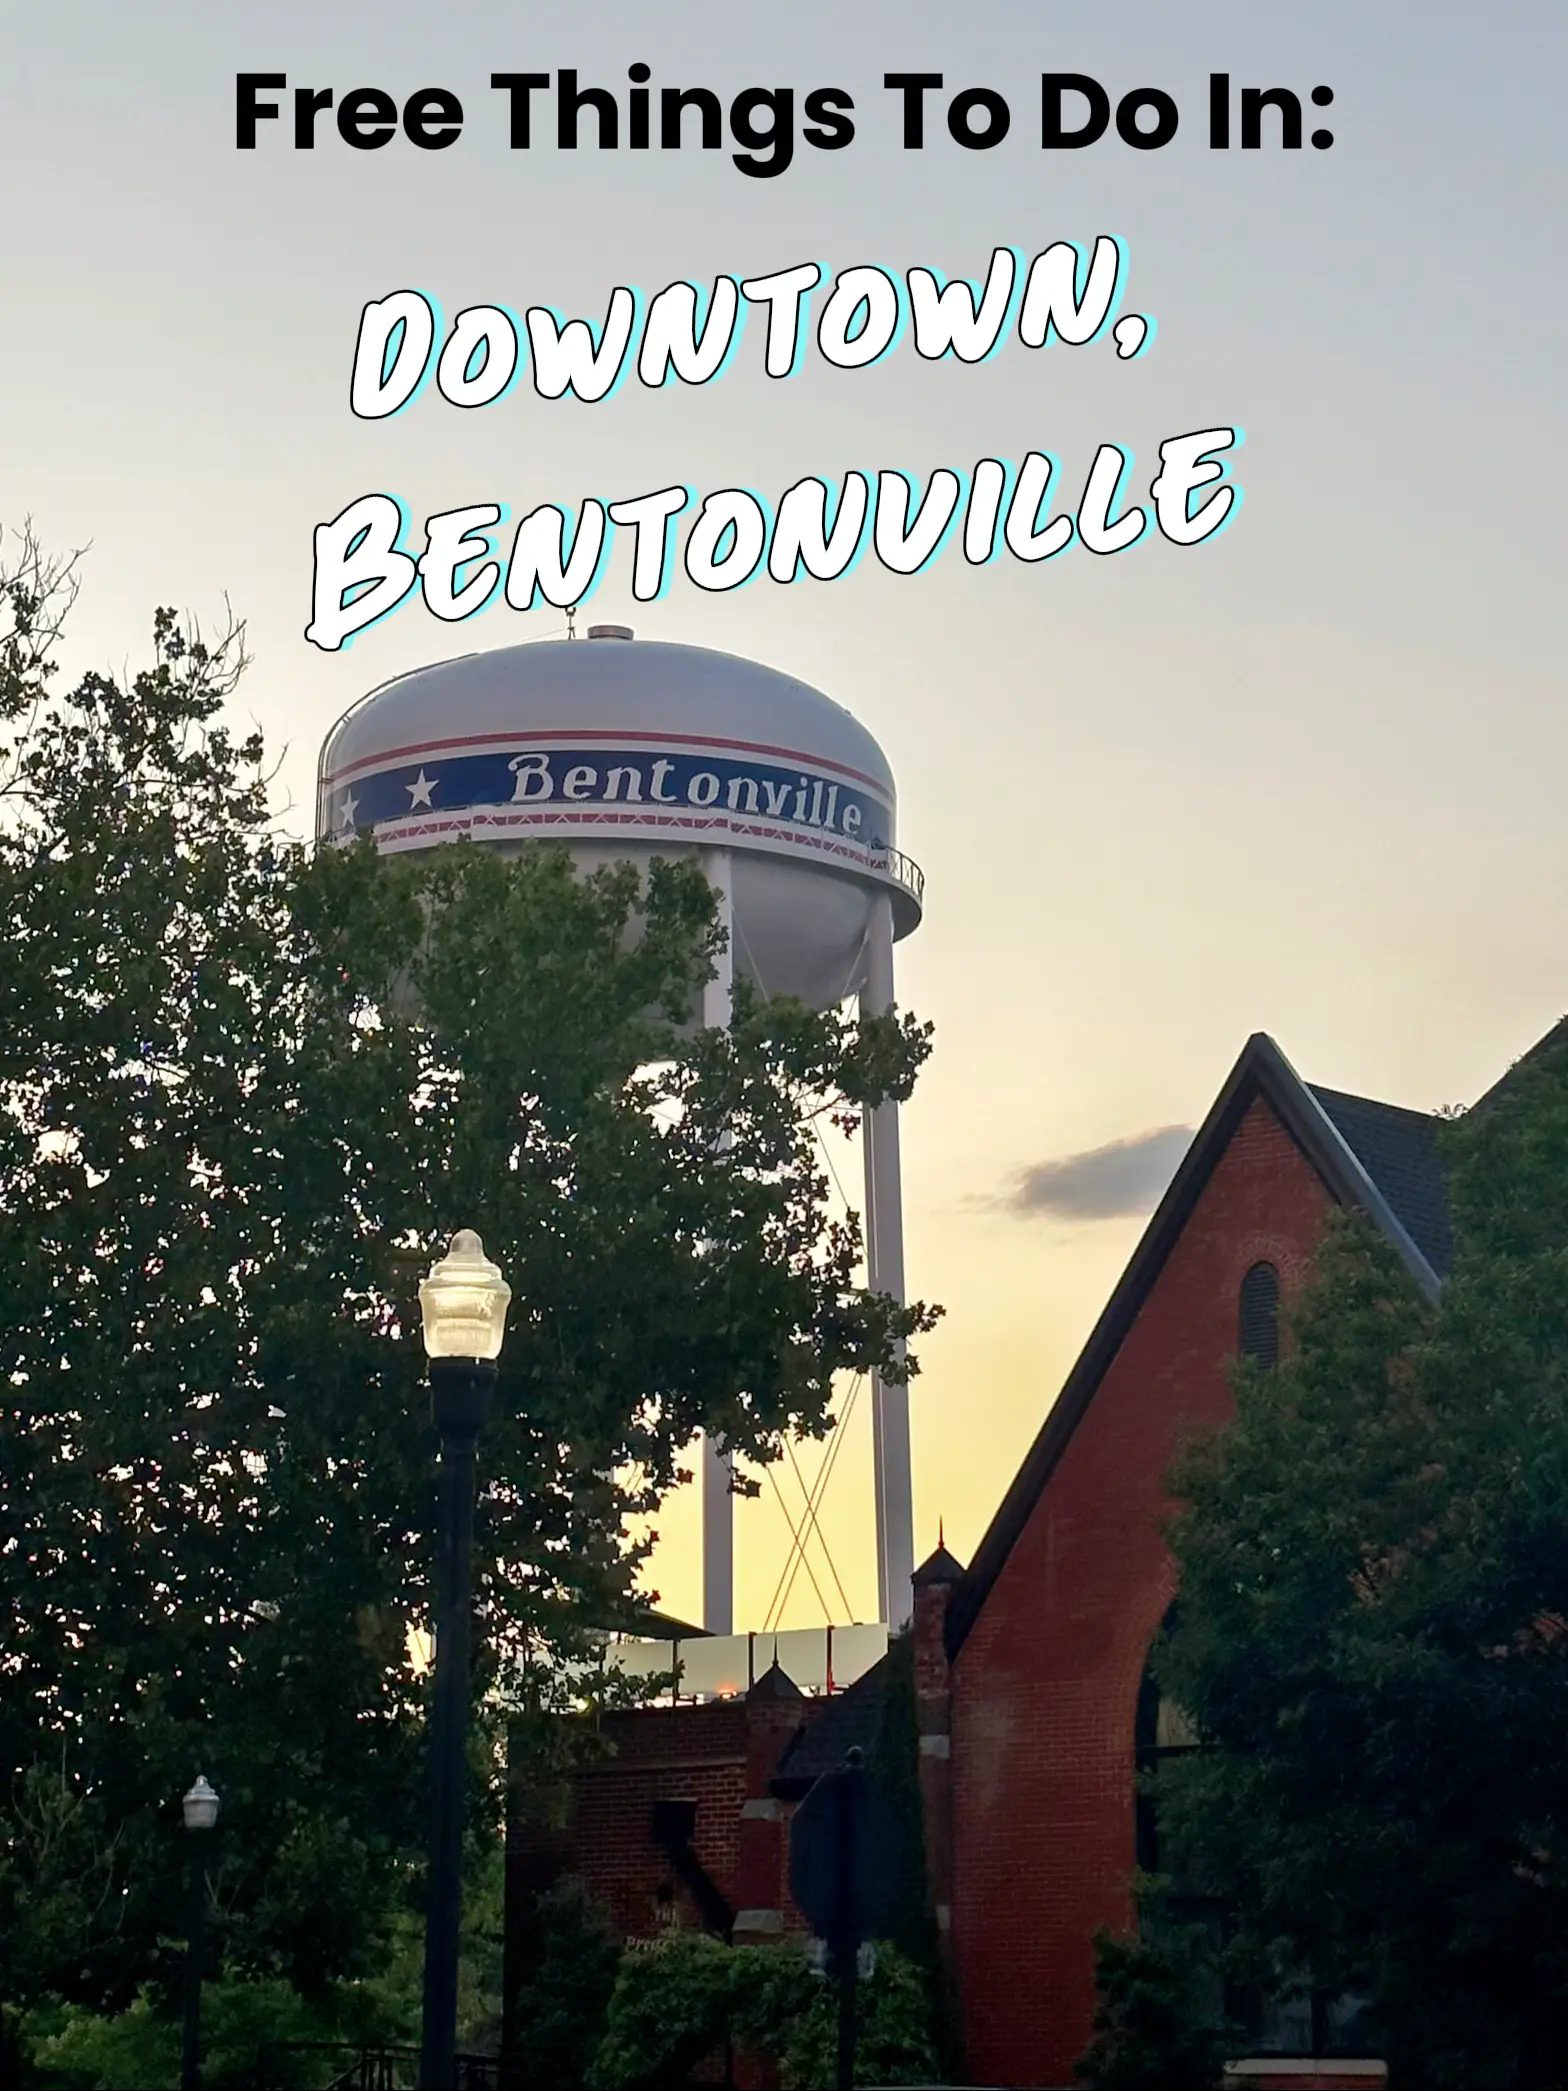 Downtown Bentonville